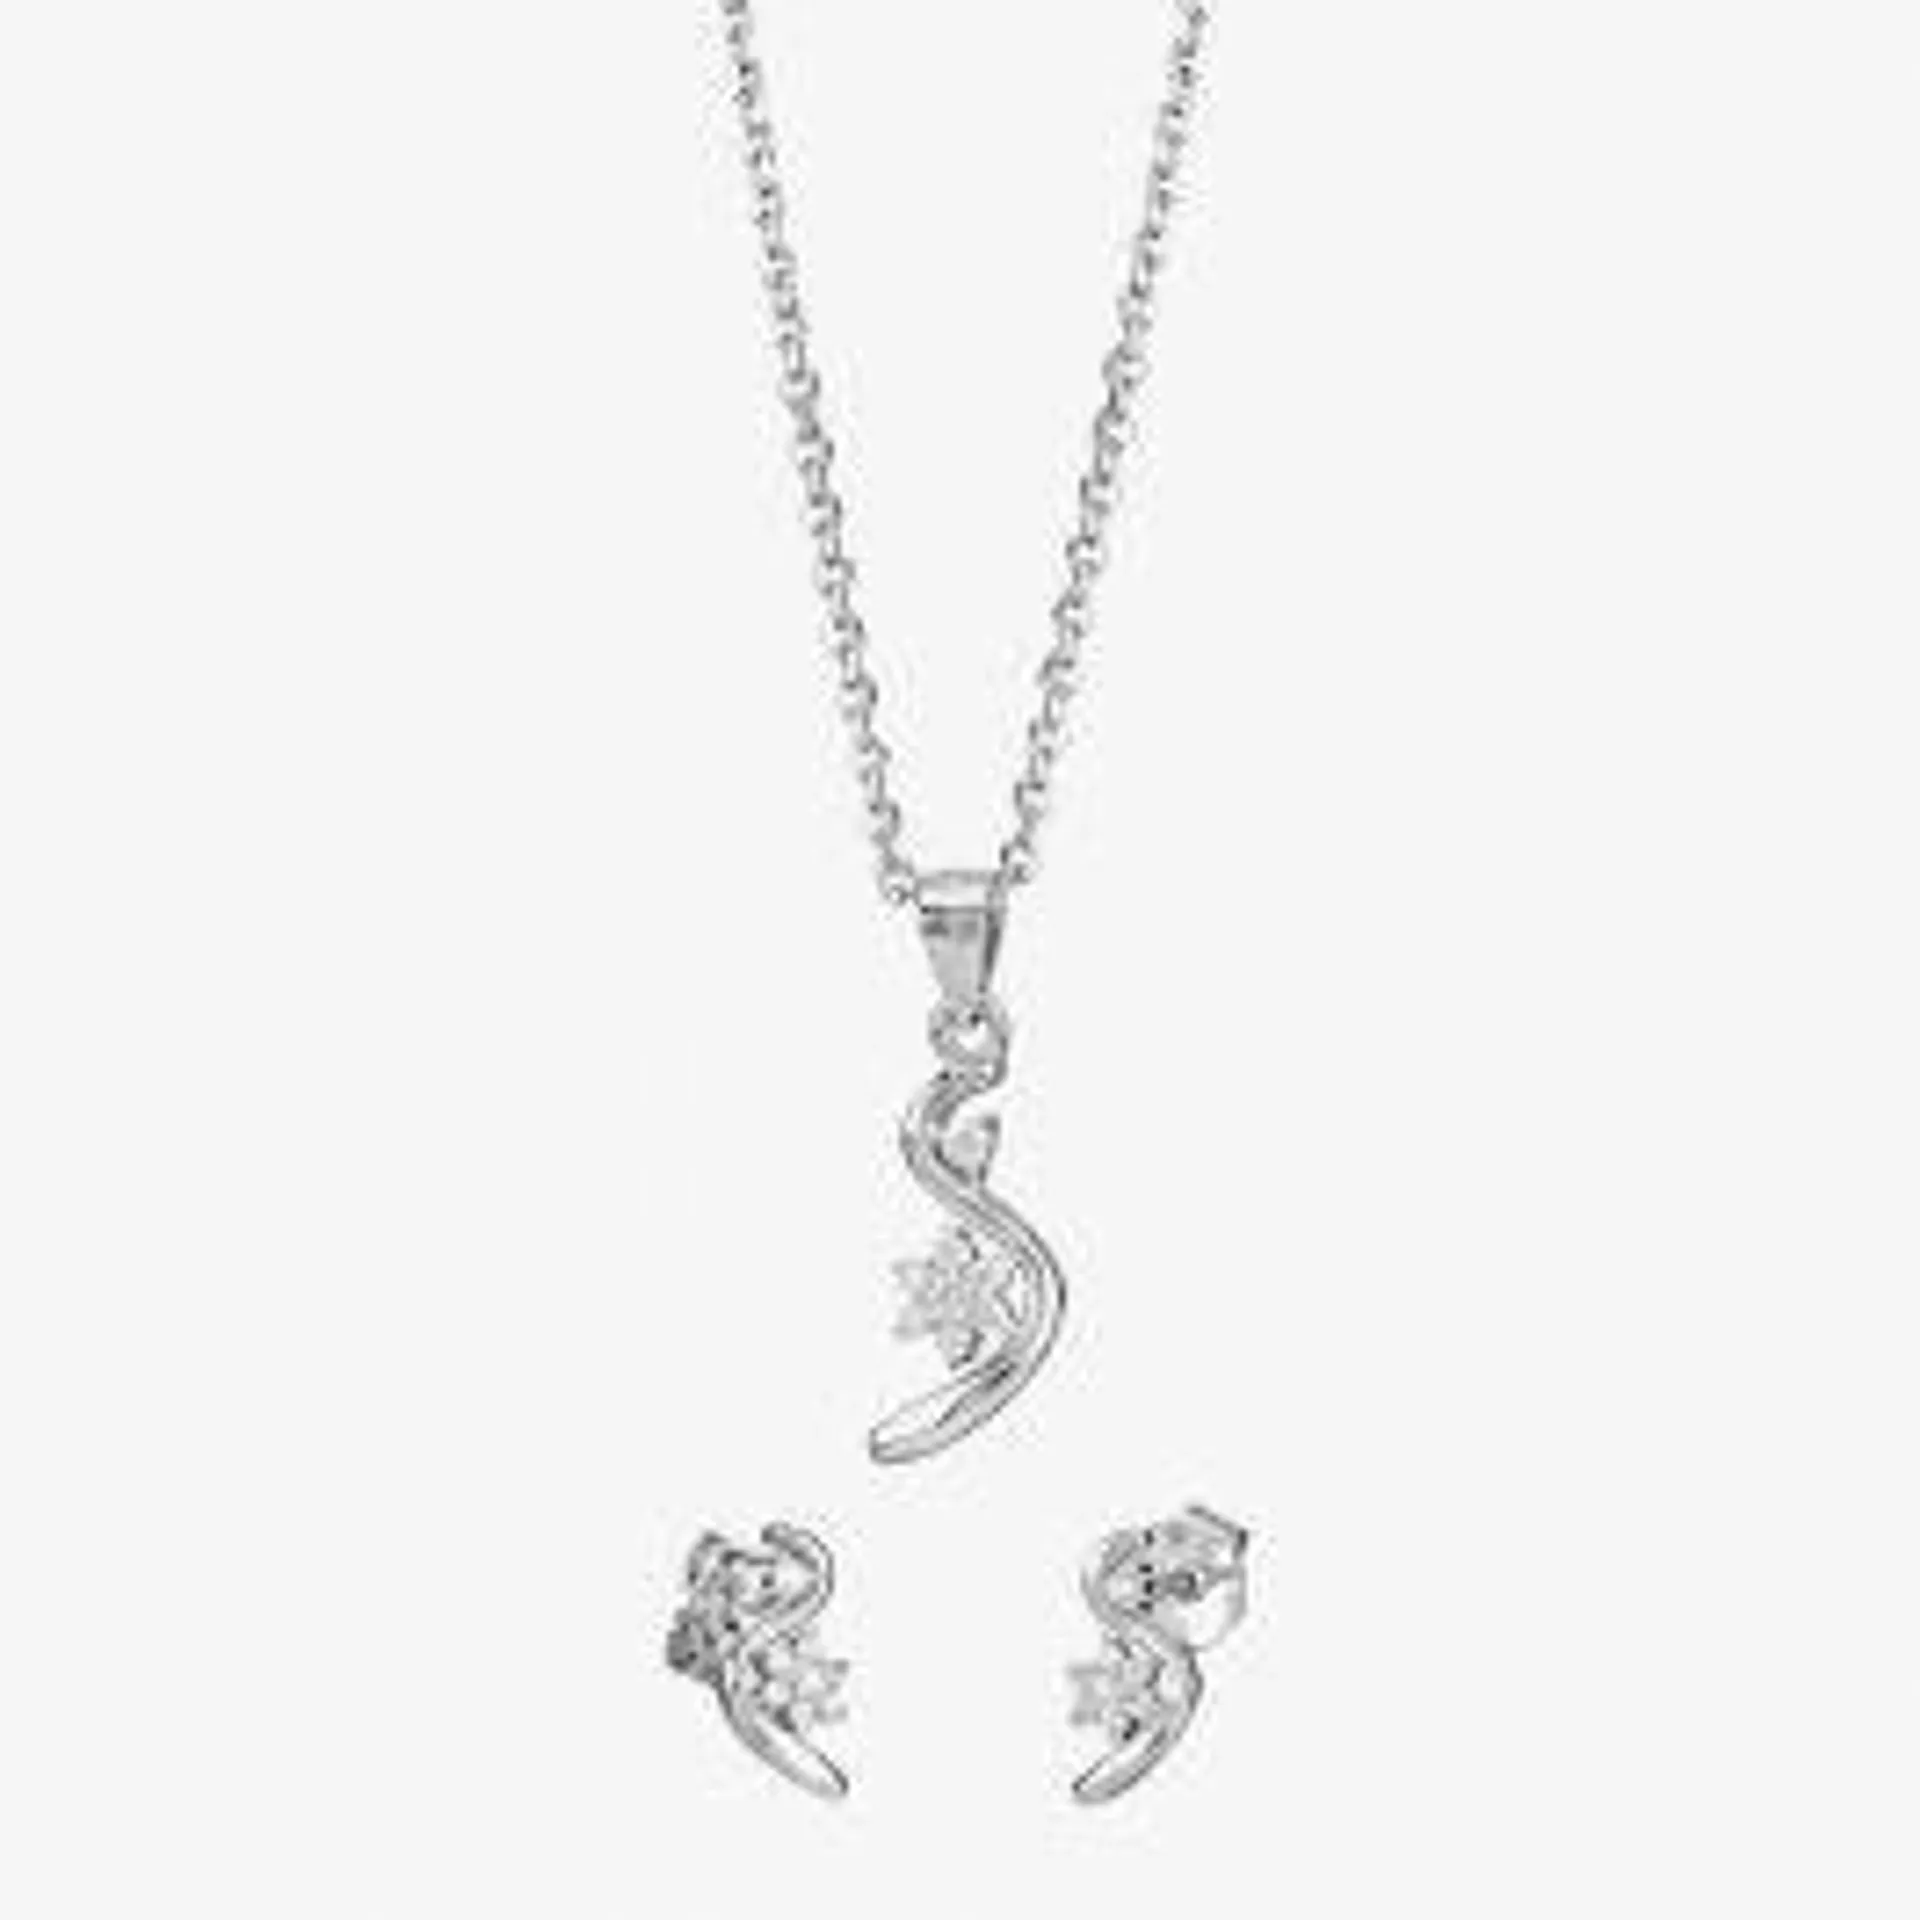 Silver Cubic Zirconia Swirl Flower Pendant and Earring Set E614543+P613937